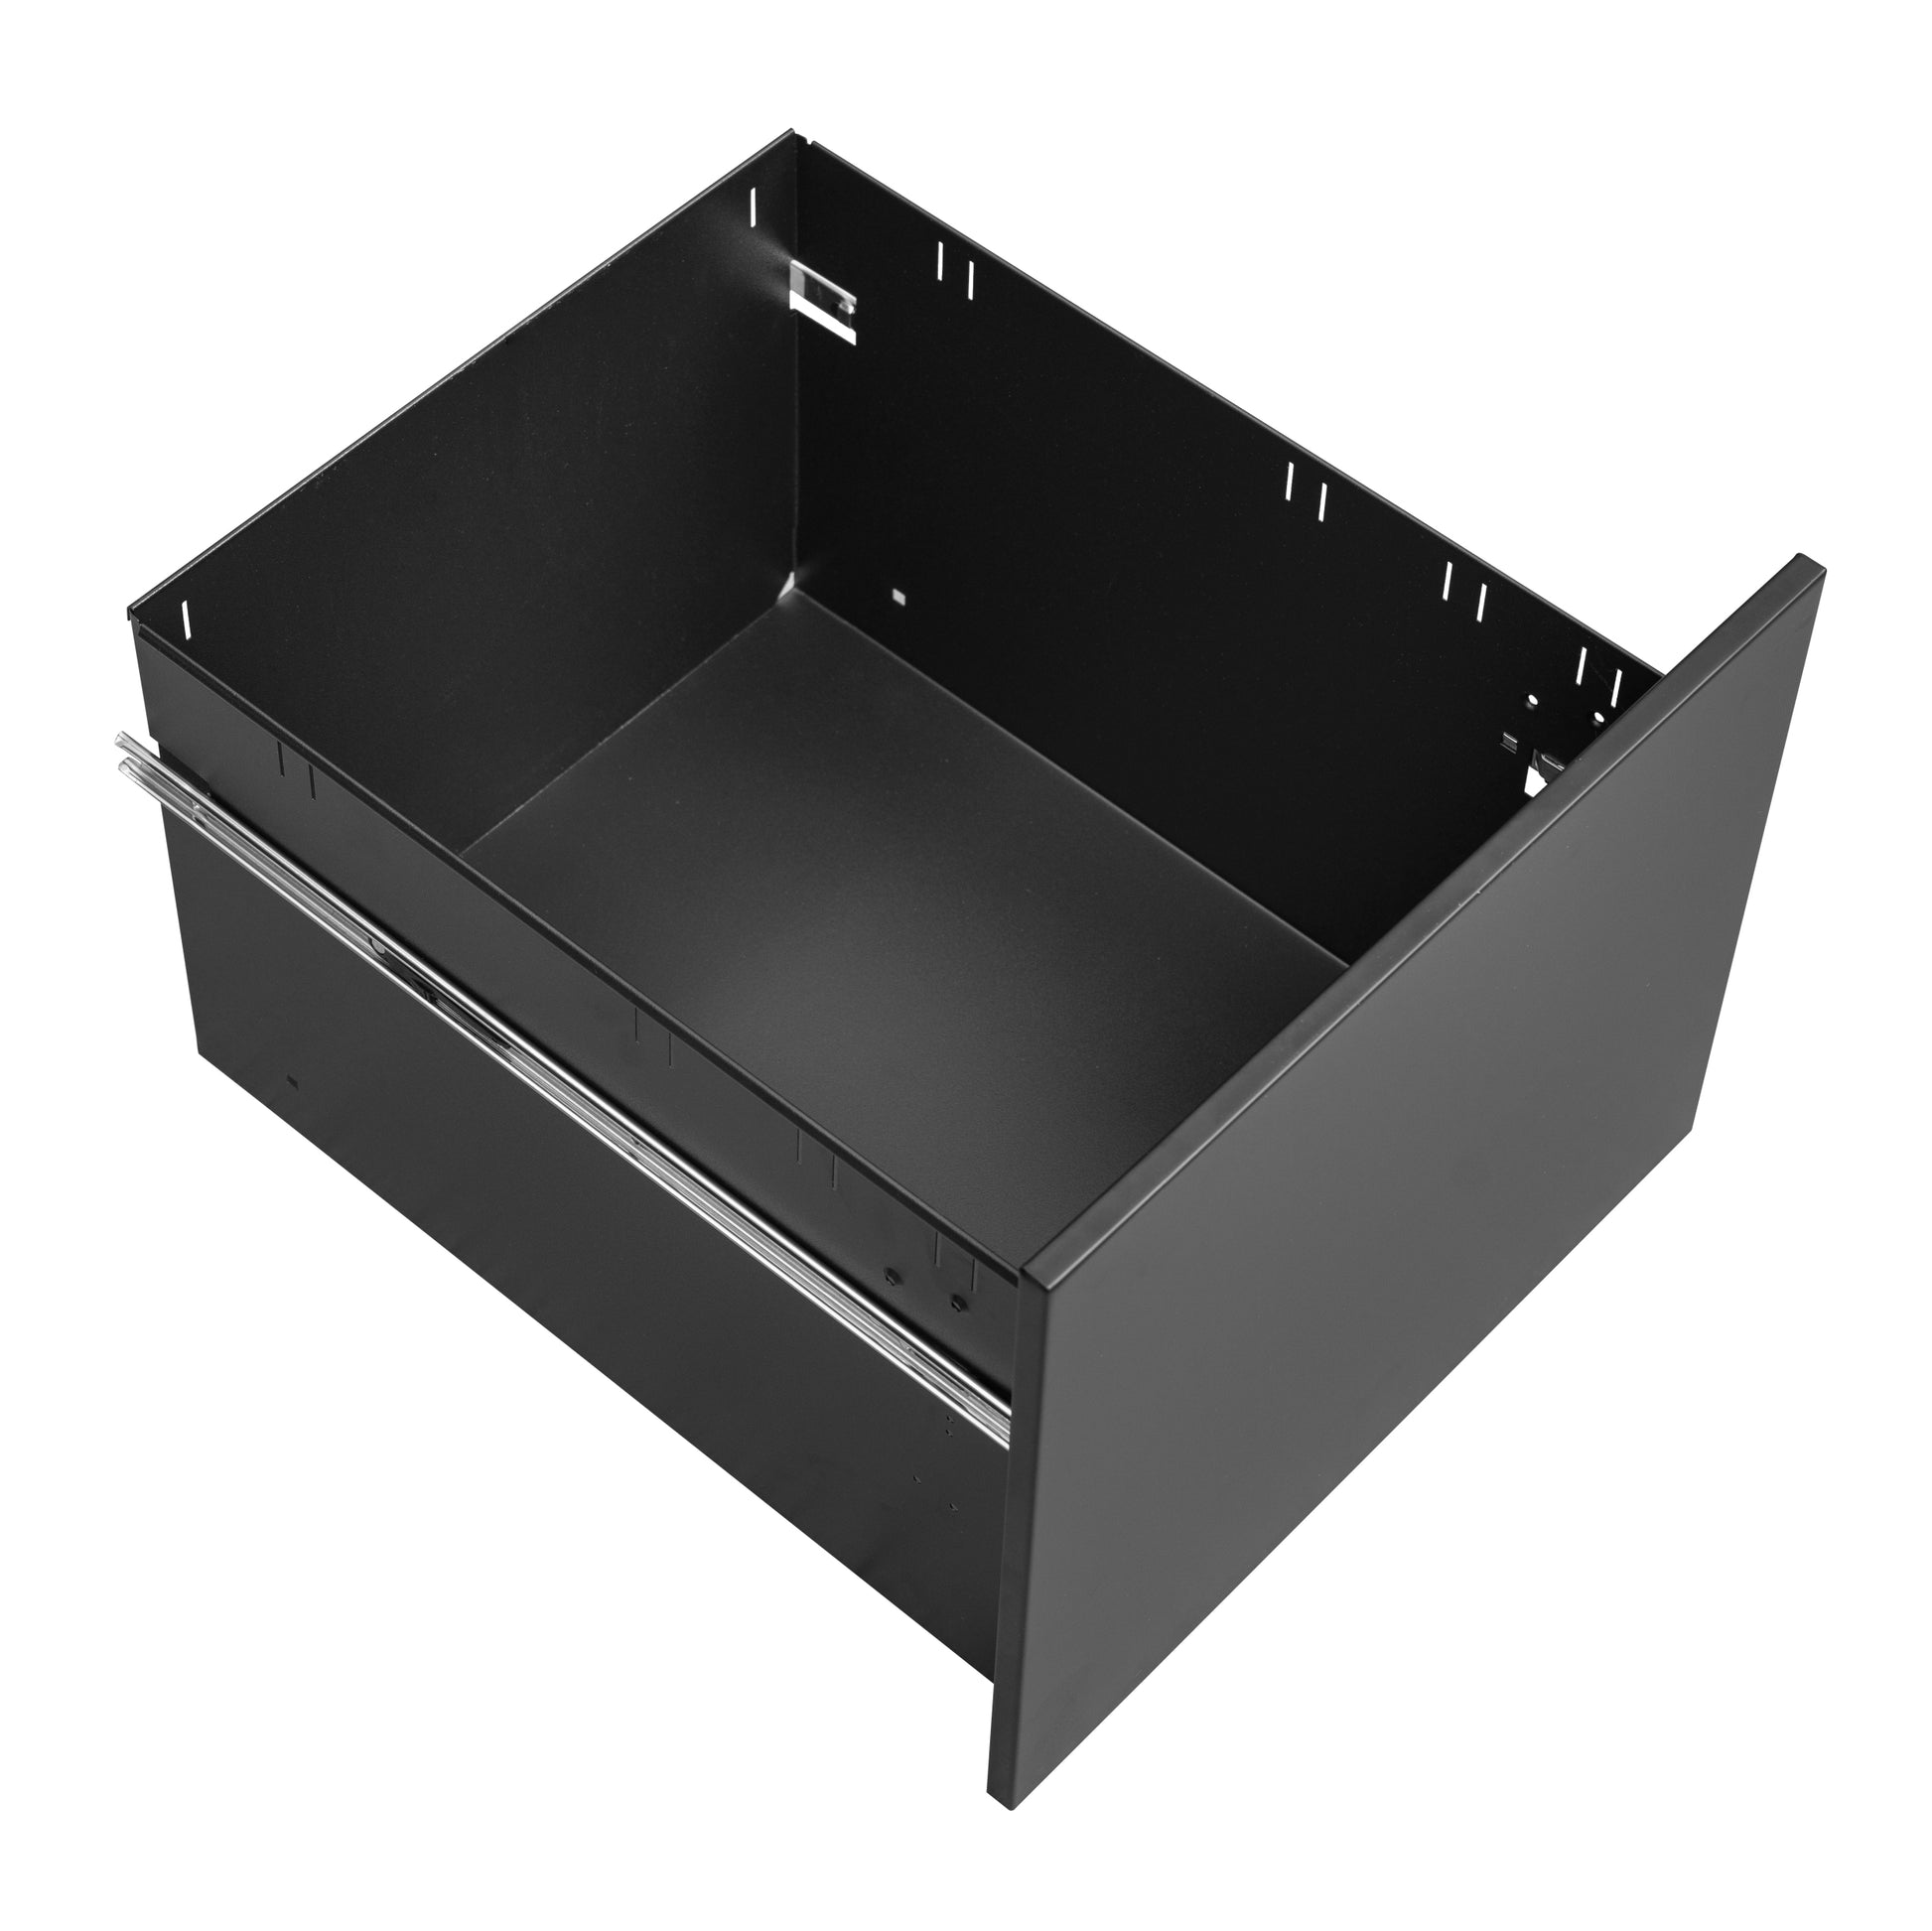 2 Drawer File Cabinet with Lock, Steel Mobile Filing black-steel